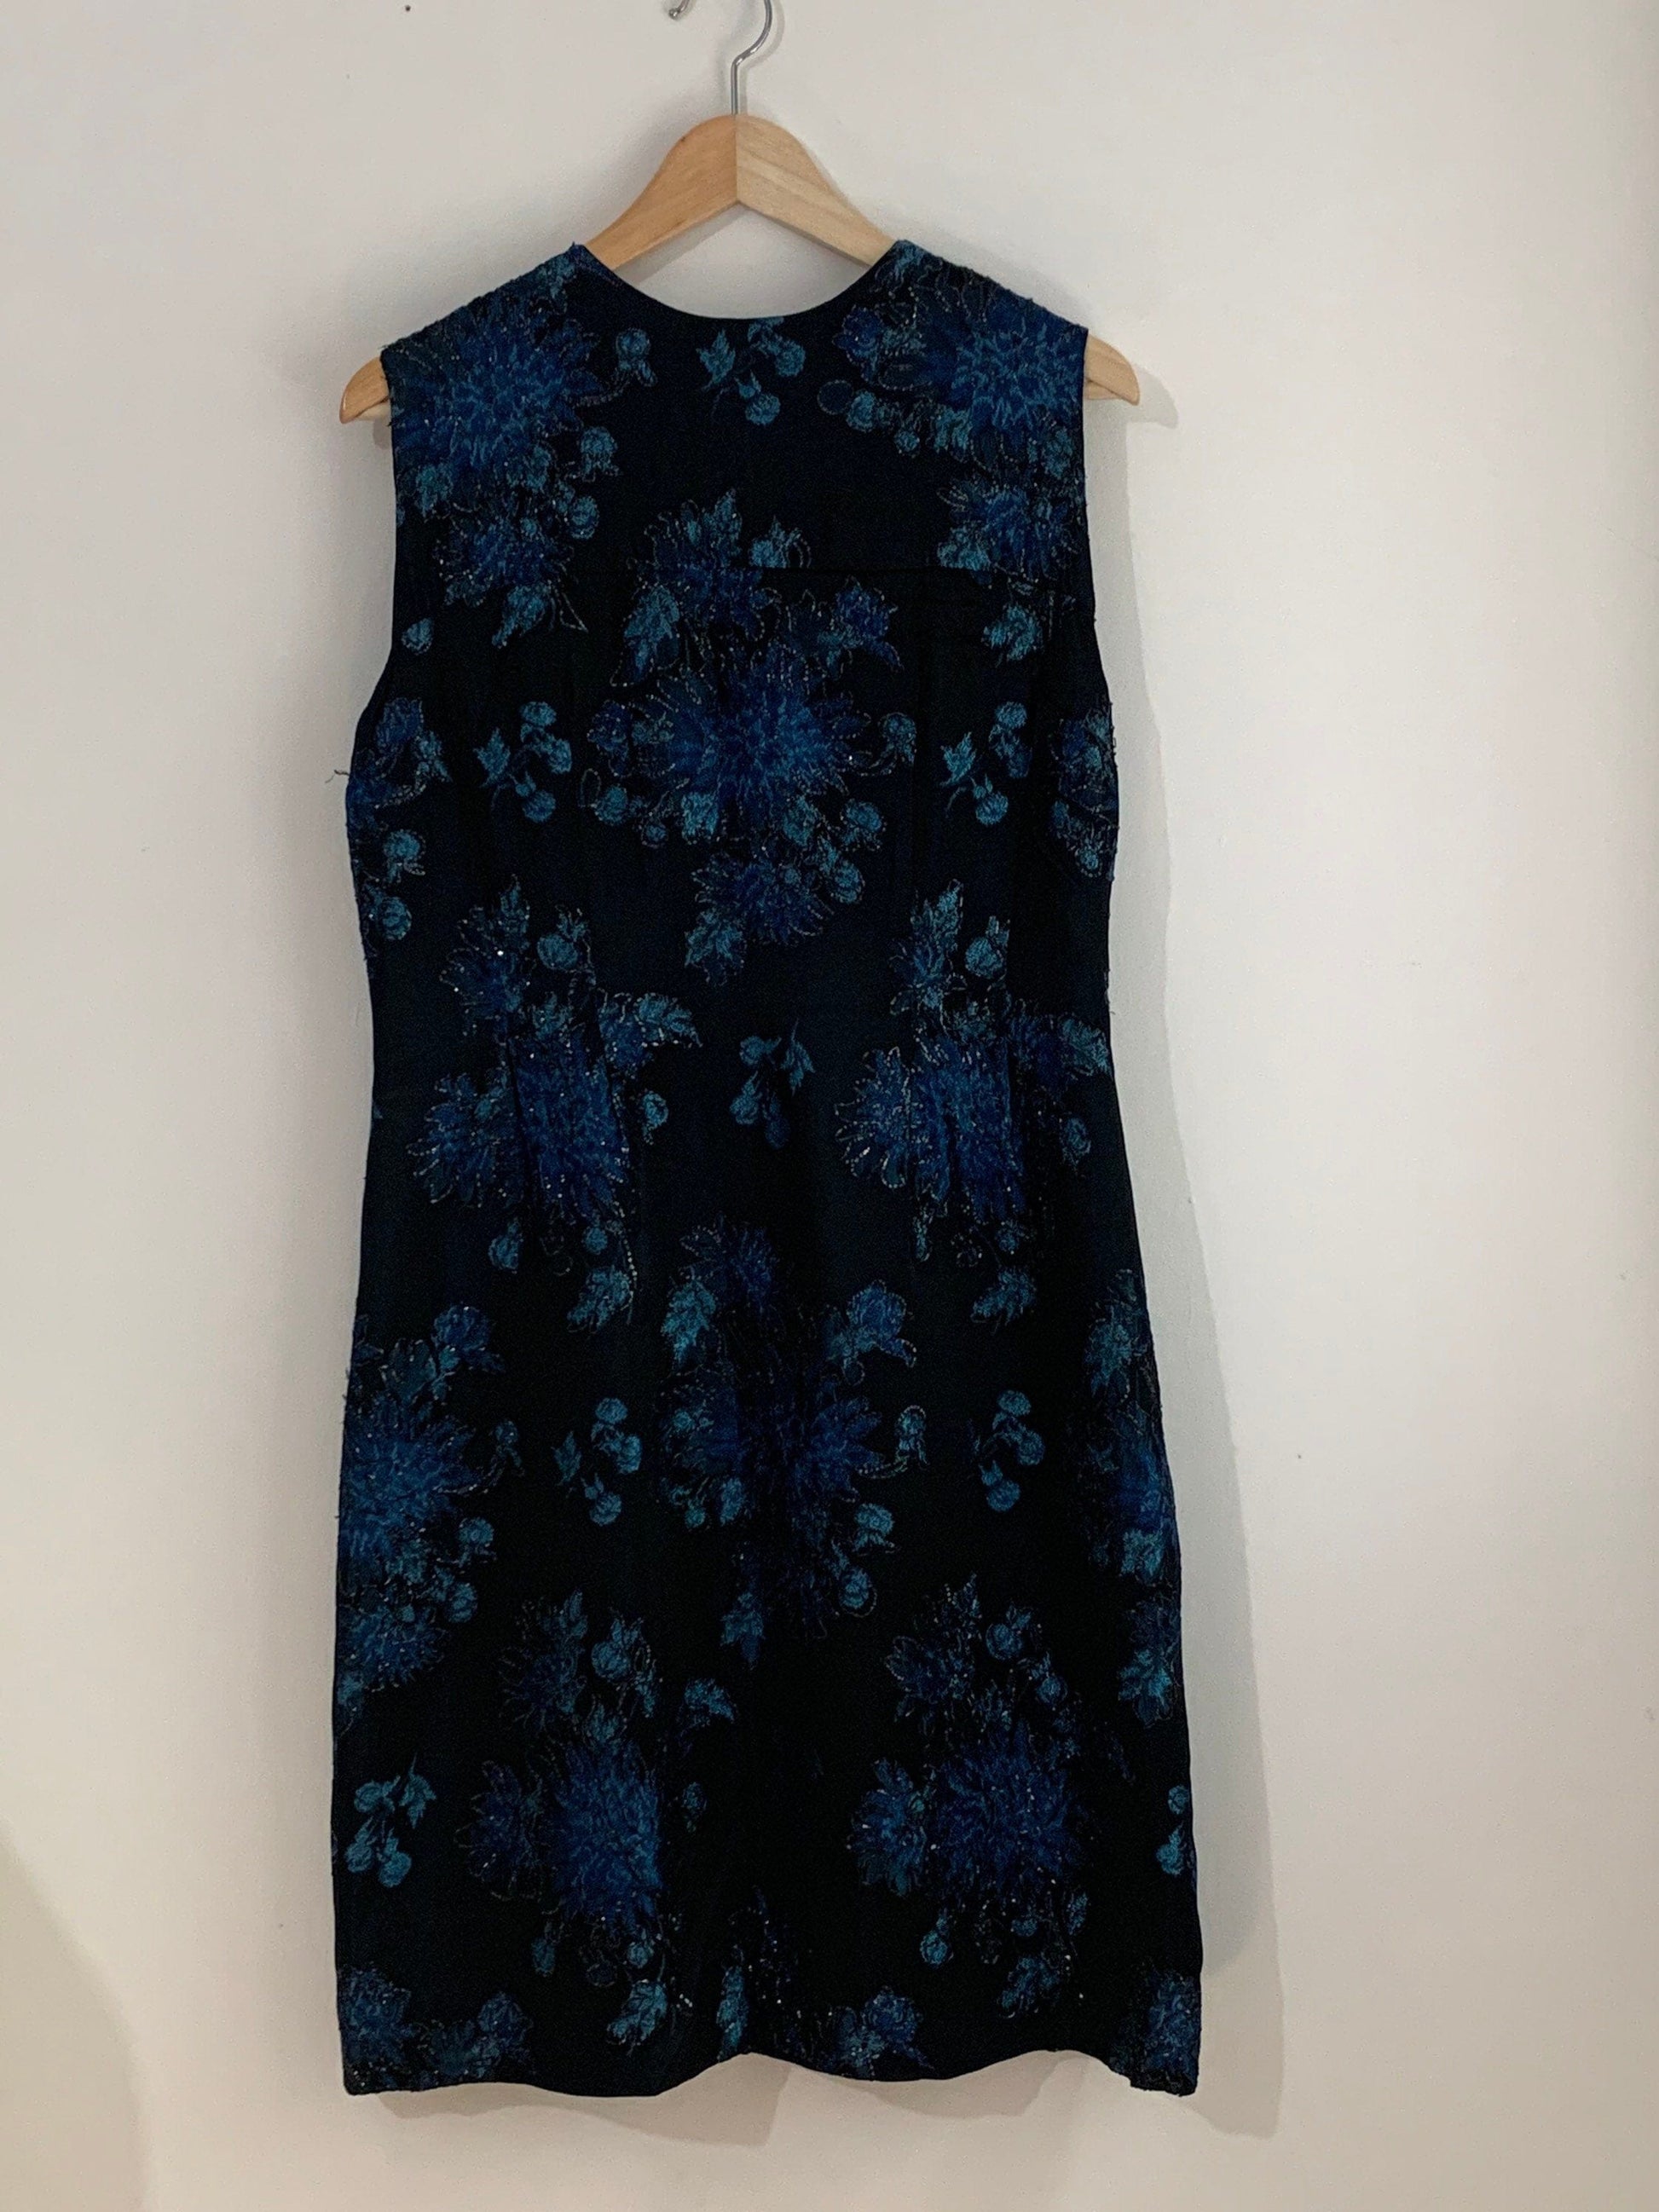 1960s vintage Dress Blue Black sparkle Brocade Floral Mini Dress - Sleeveless Handmade